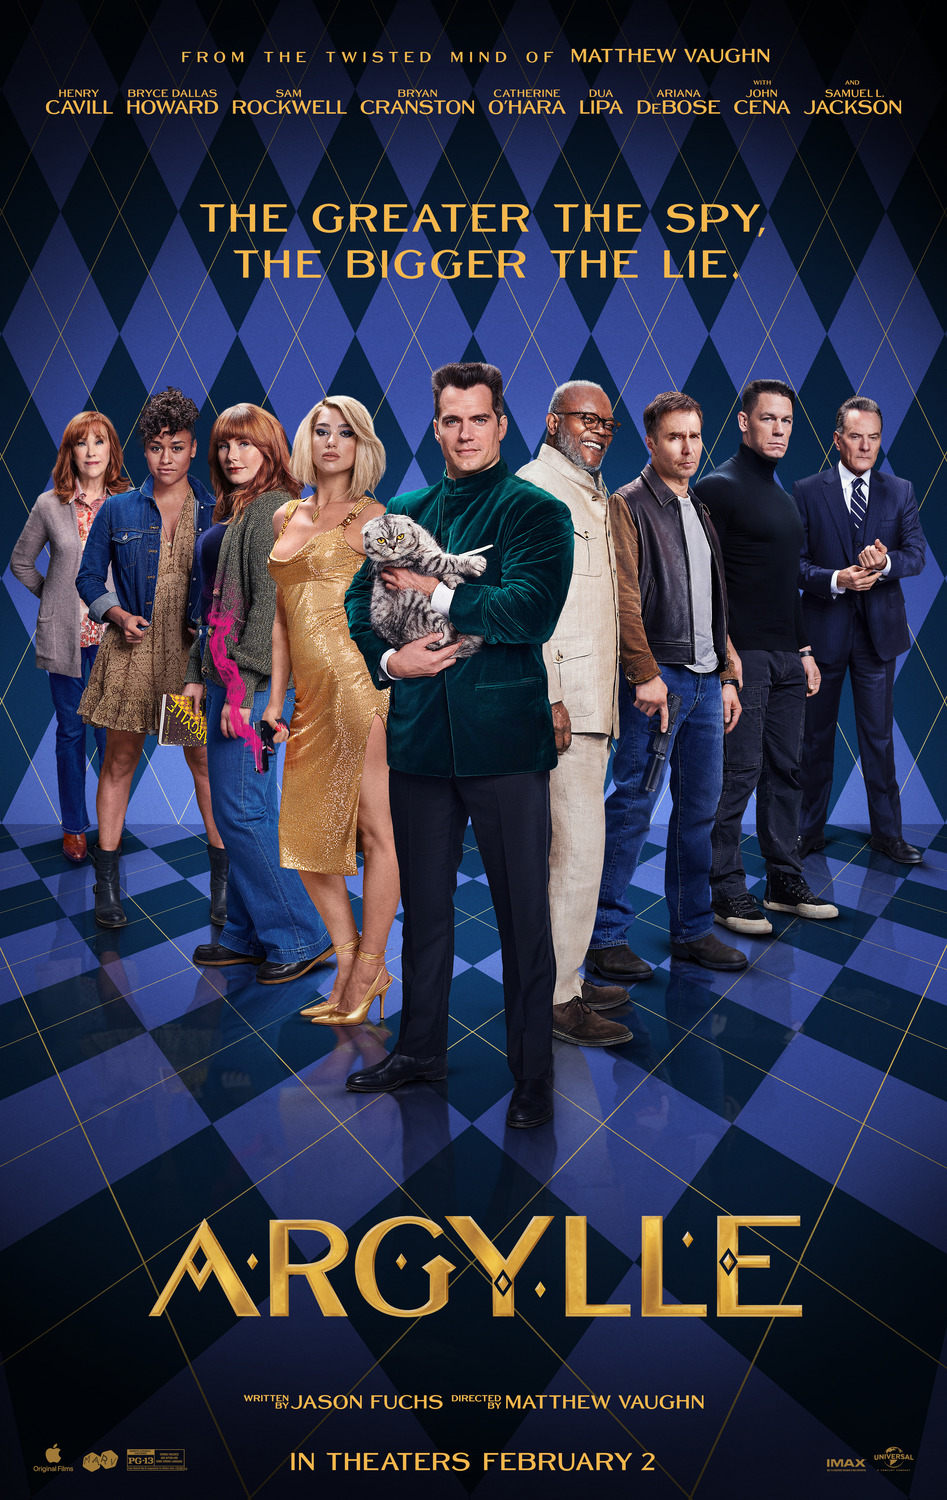 Argylle poster - Argylle tops weekend box office